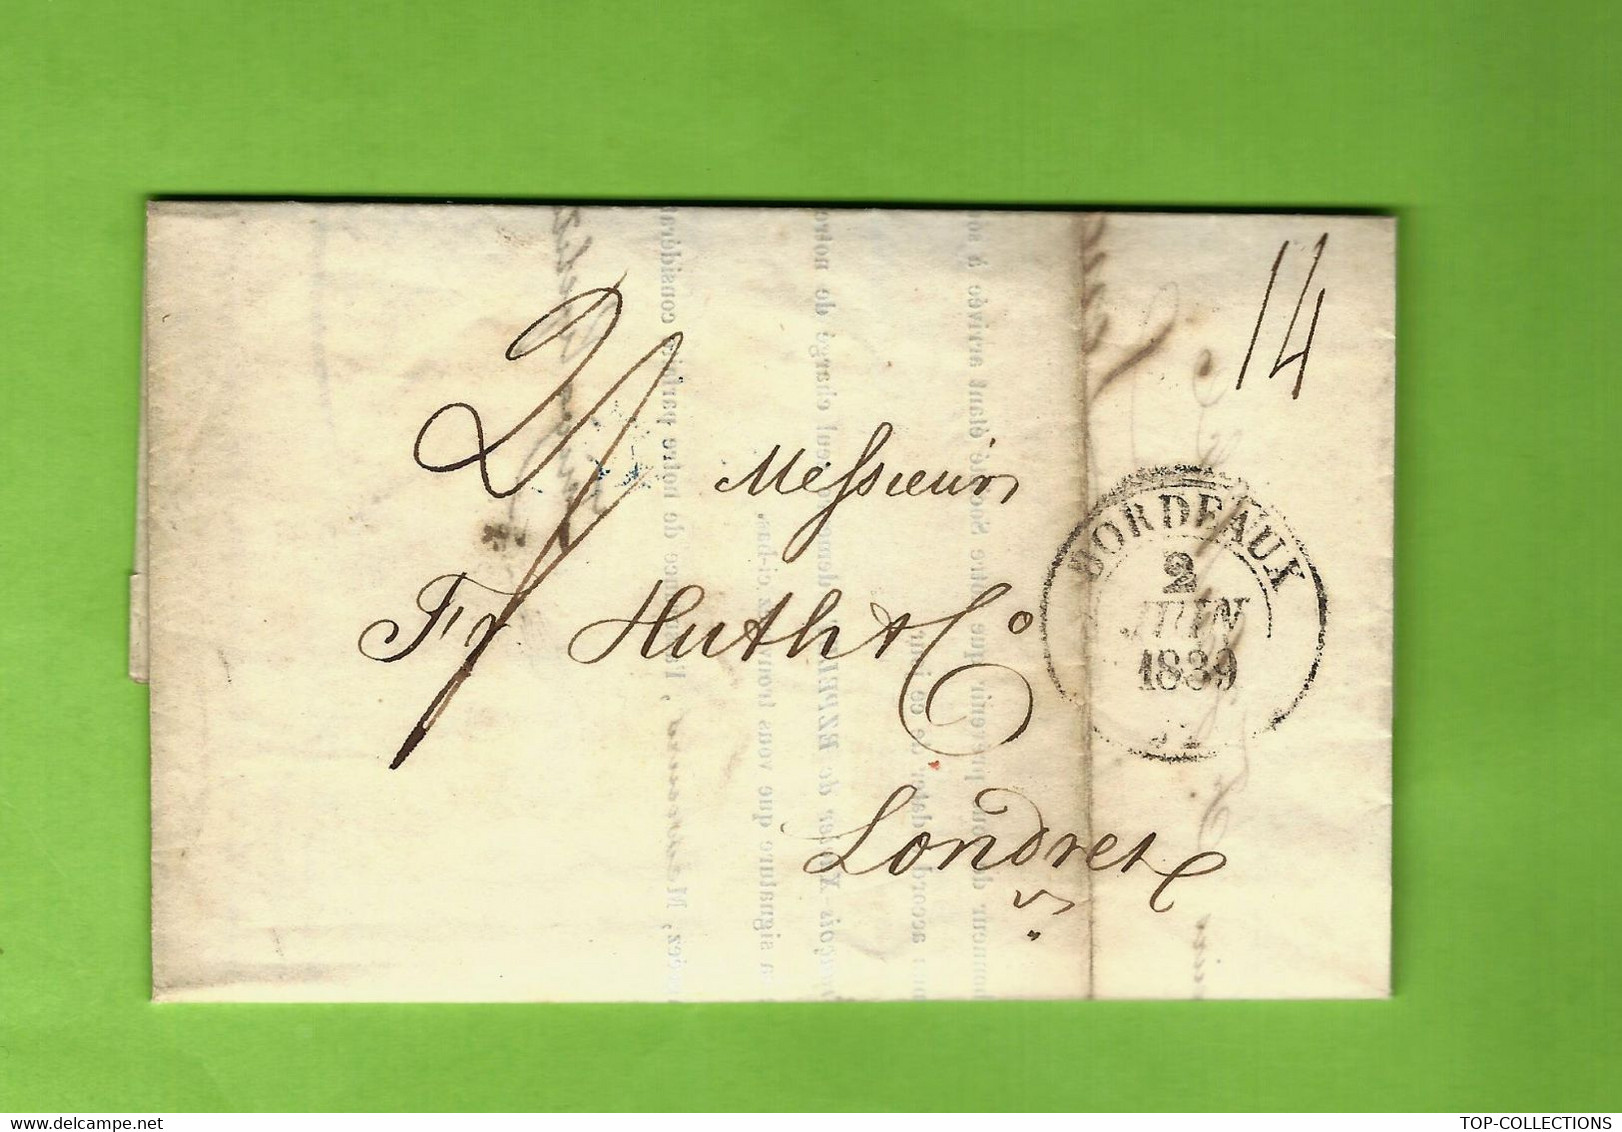 FAMILLE NOBLESSE D’EZPELETA  1839  sign.  Inigo d’Ezpeleta banque negoce navigation  Bordeaux  =>Huth banque LONDRES